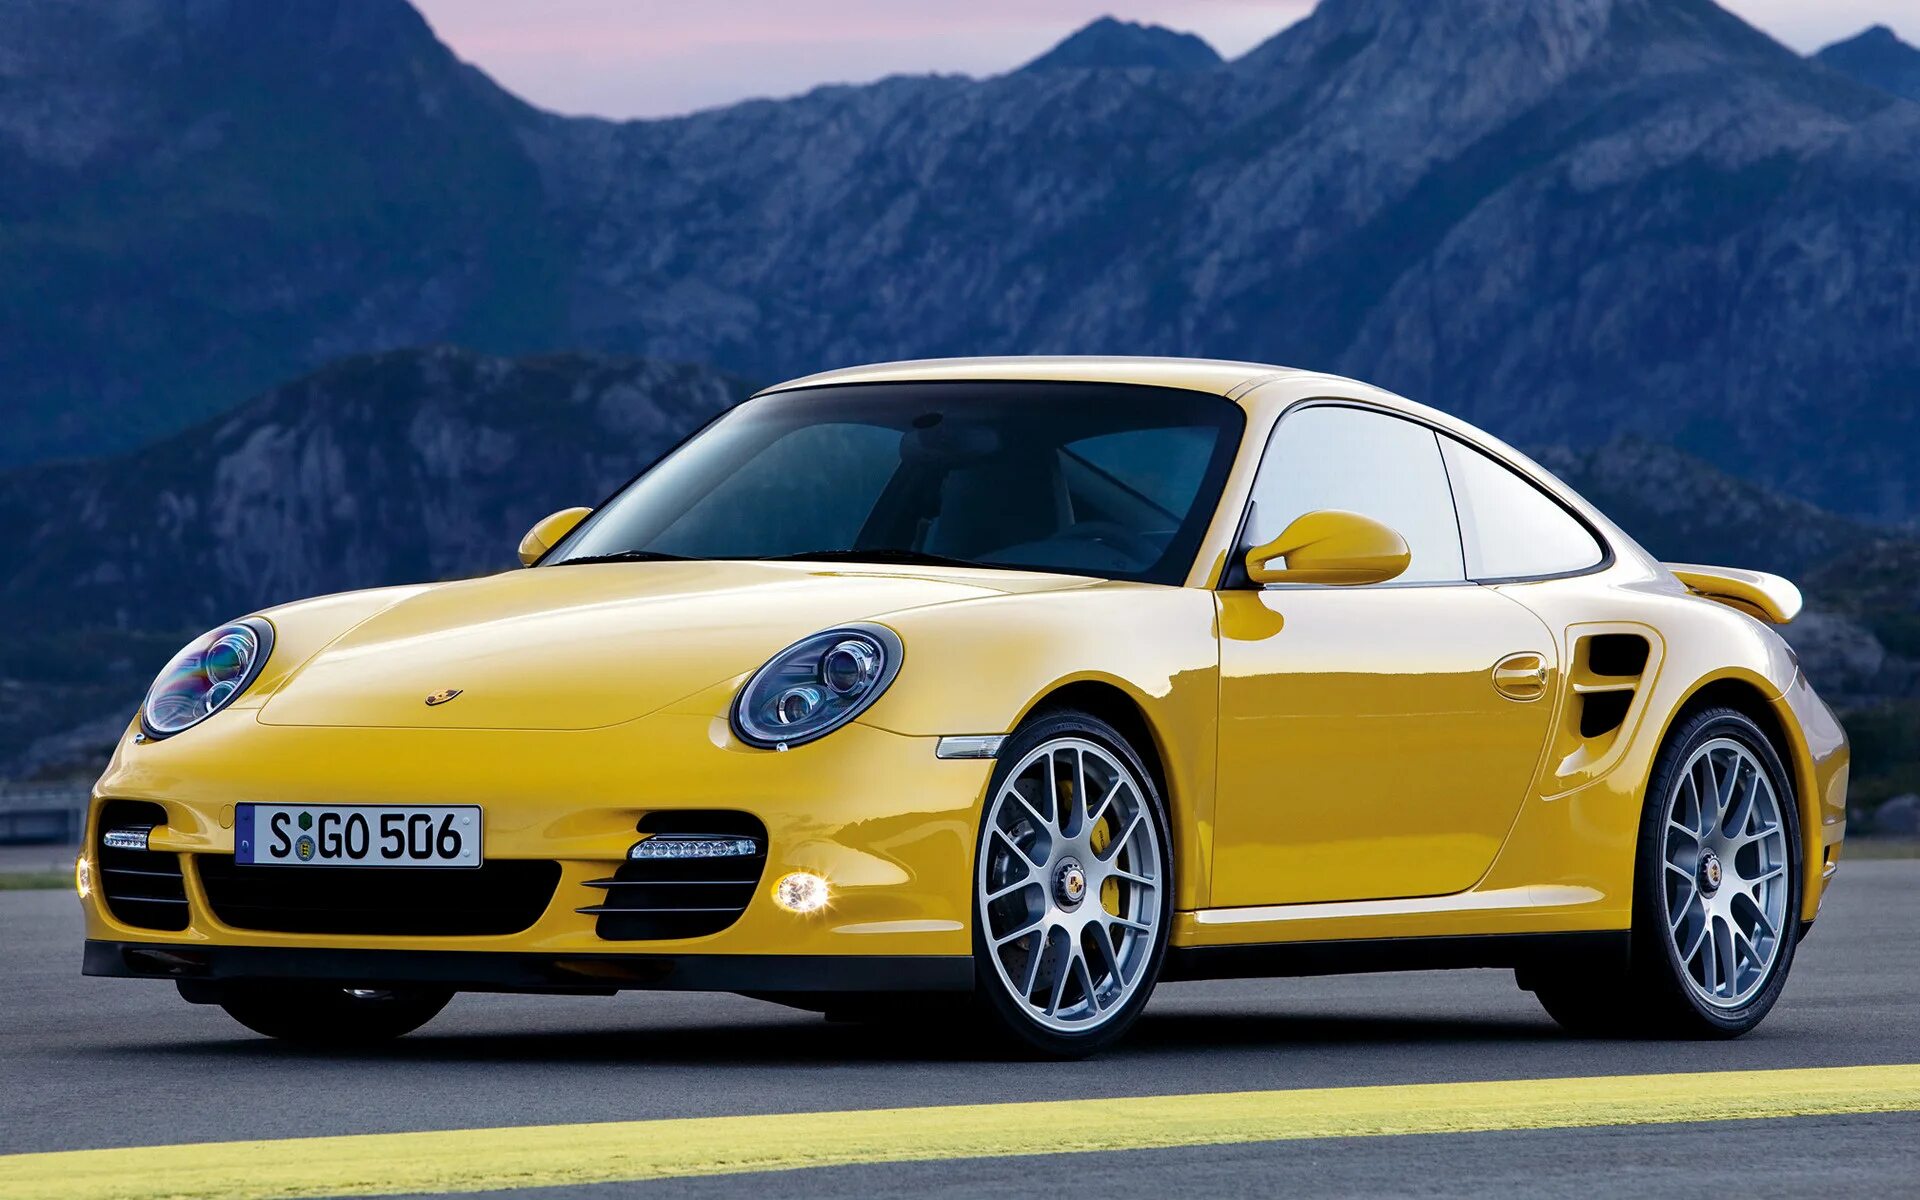 Порше 911 желтый. Порше 911 турбо с. Порше 911 турбо 2009. Porsche 911 Turbo.